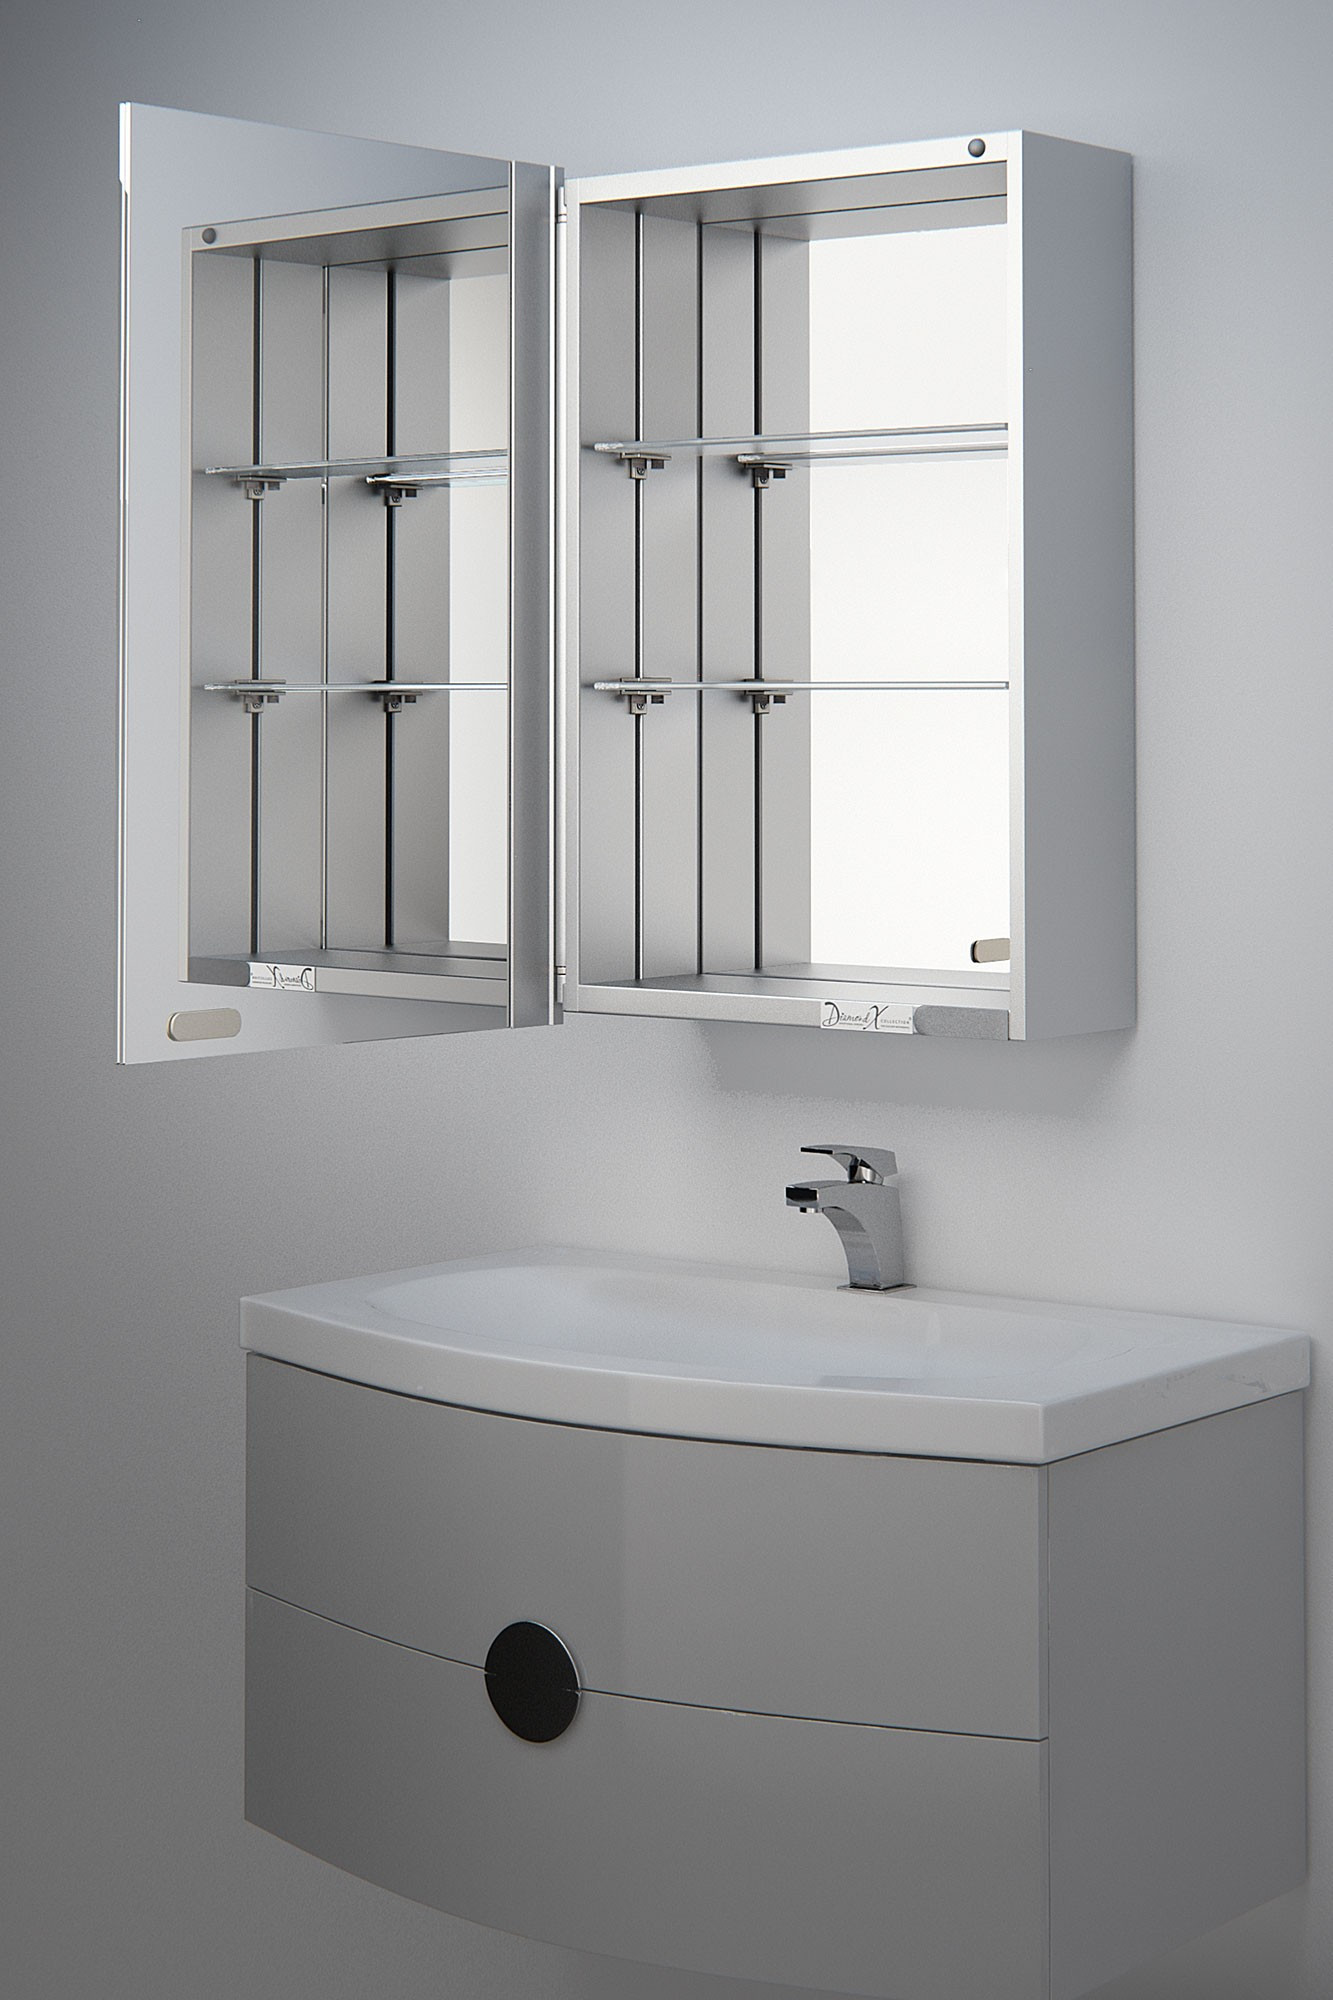 Mirrored Bathroom Cabinets
 Alban mirrored bathroom cabinet mirror H 600mm x W 400mm